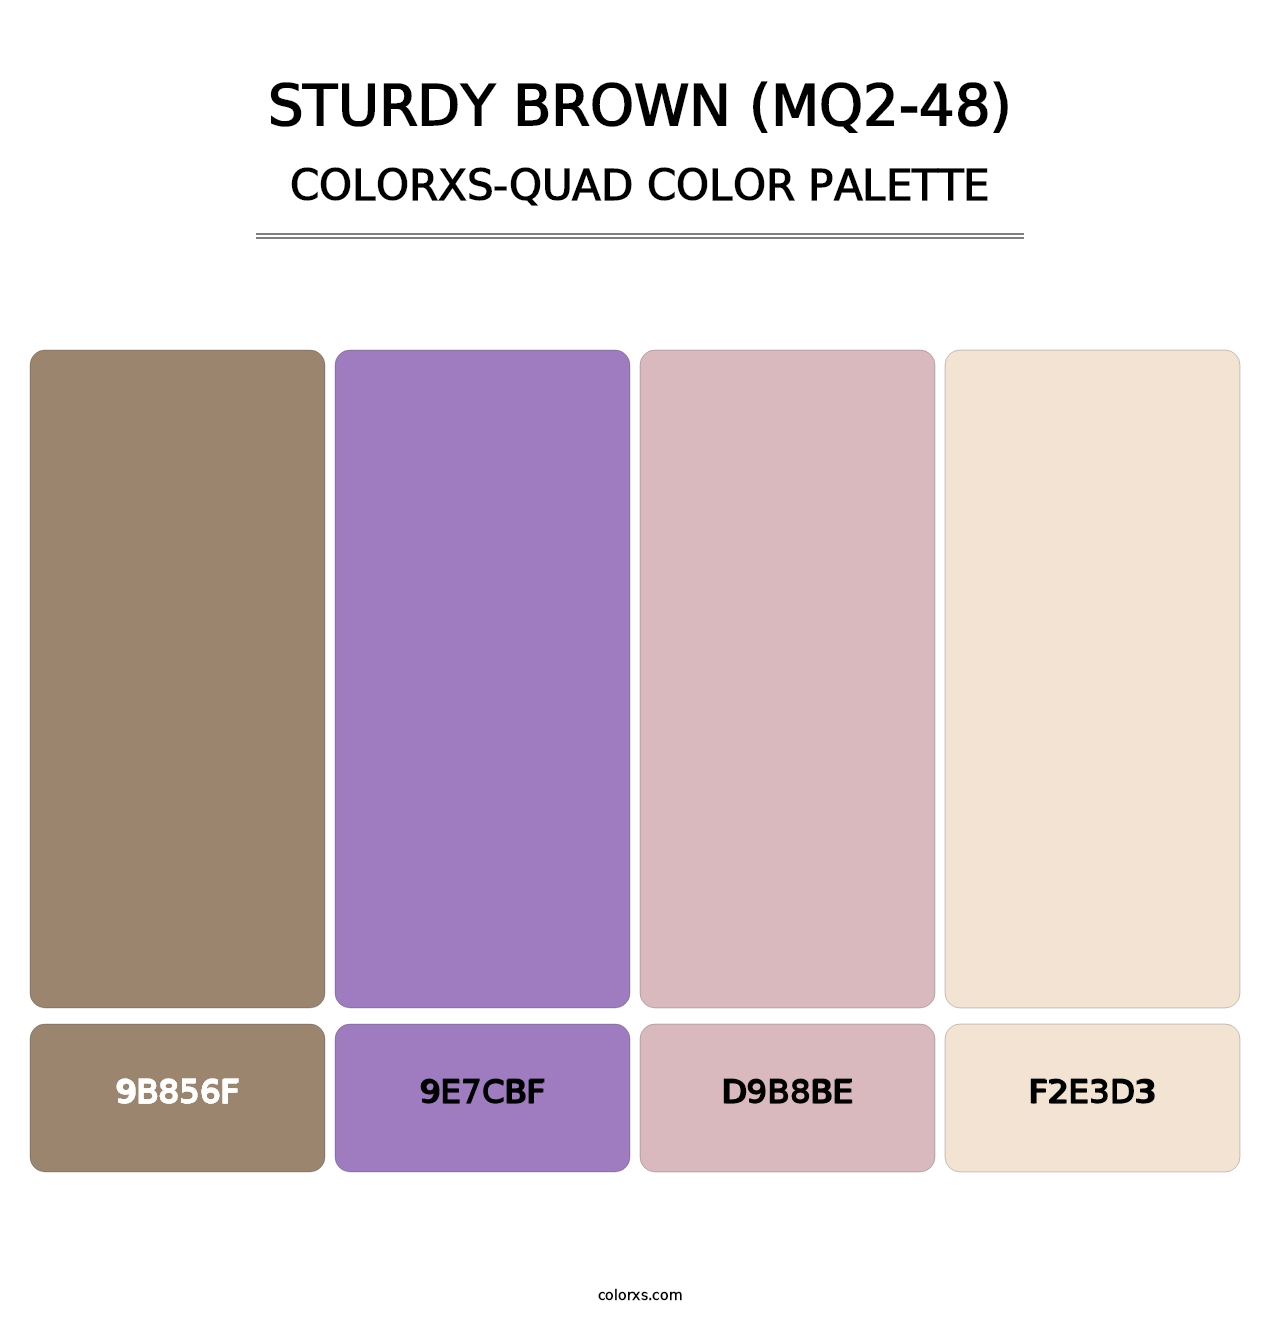 Sturdy Brown (MQ2-48) - Colorxs Quad Palette